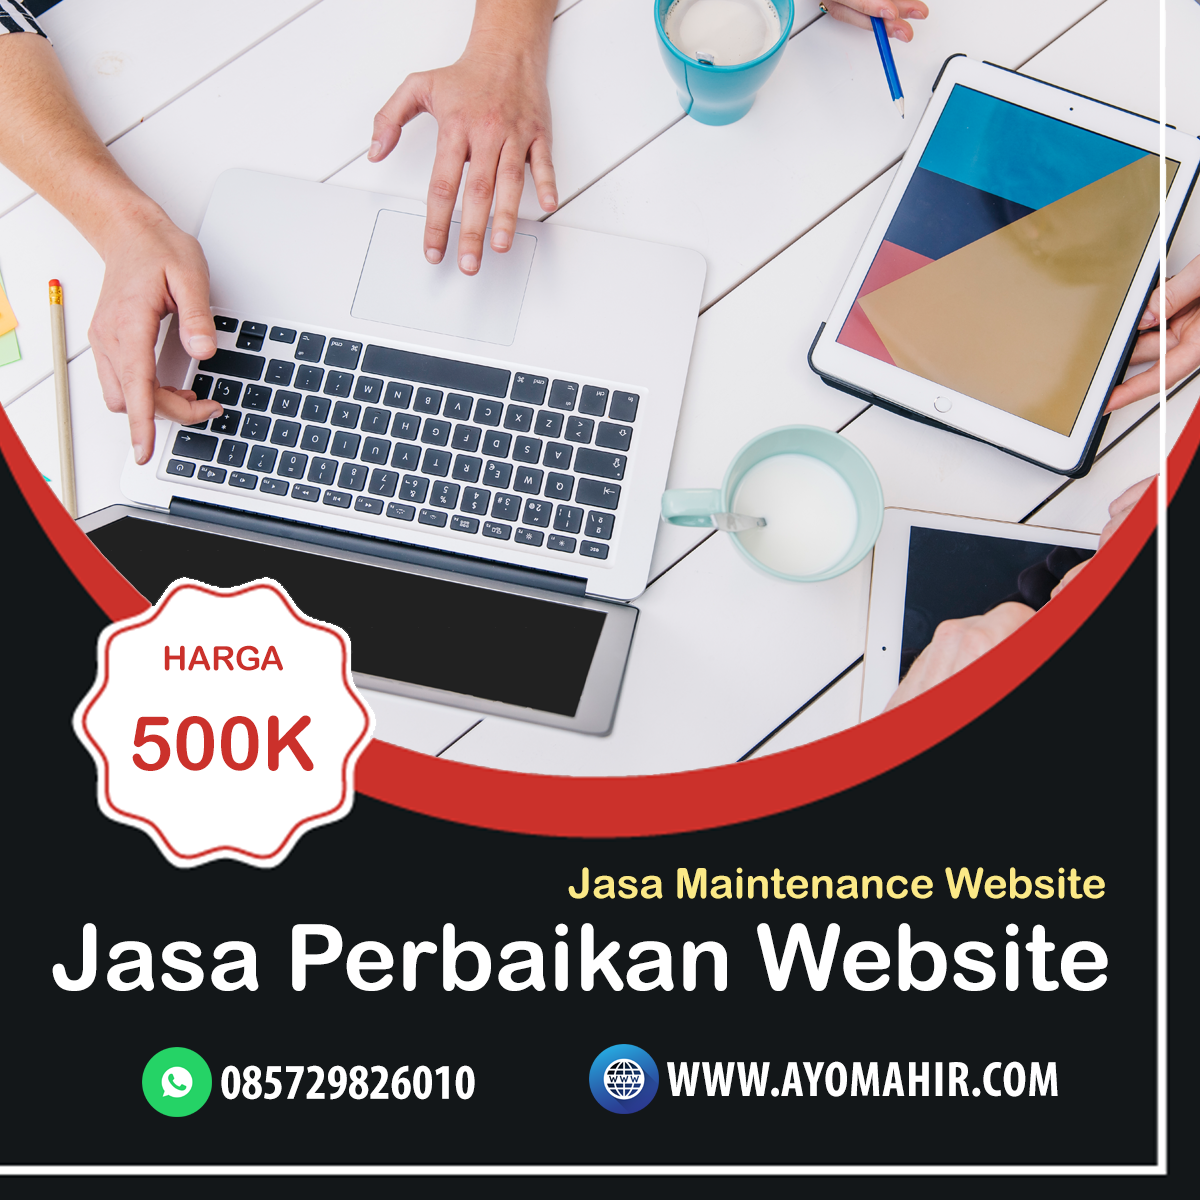 Jasa Perbaikan Website, Jasa Maintenance Website